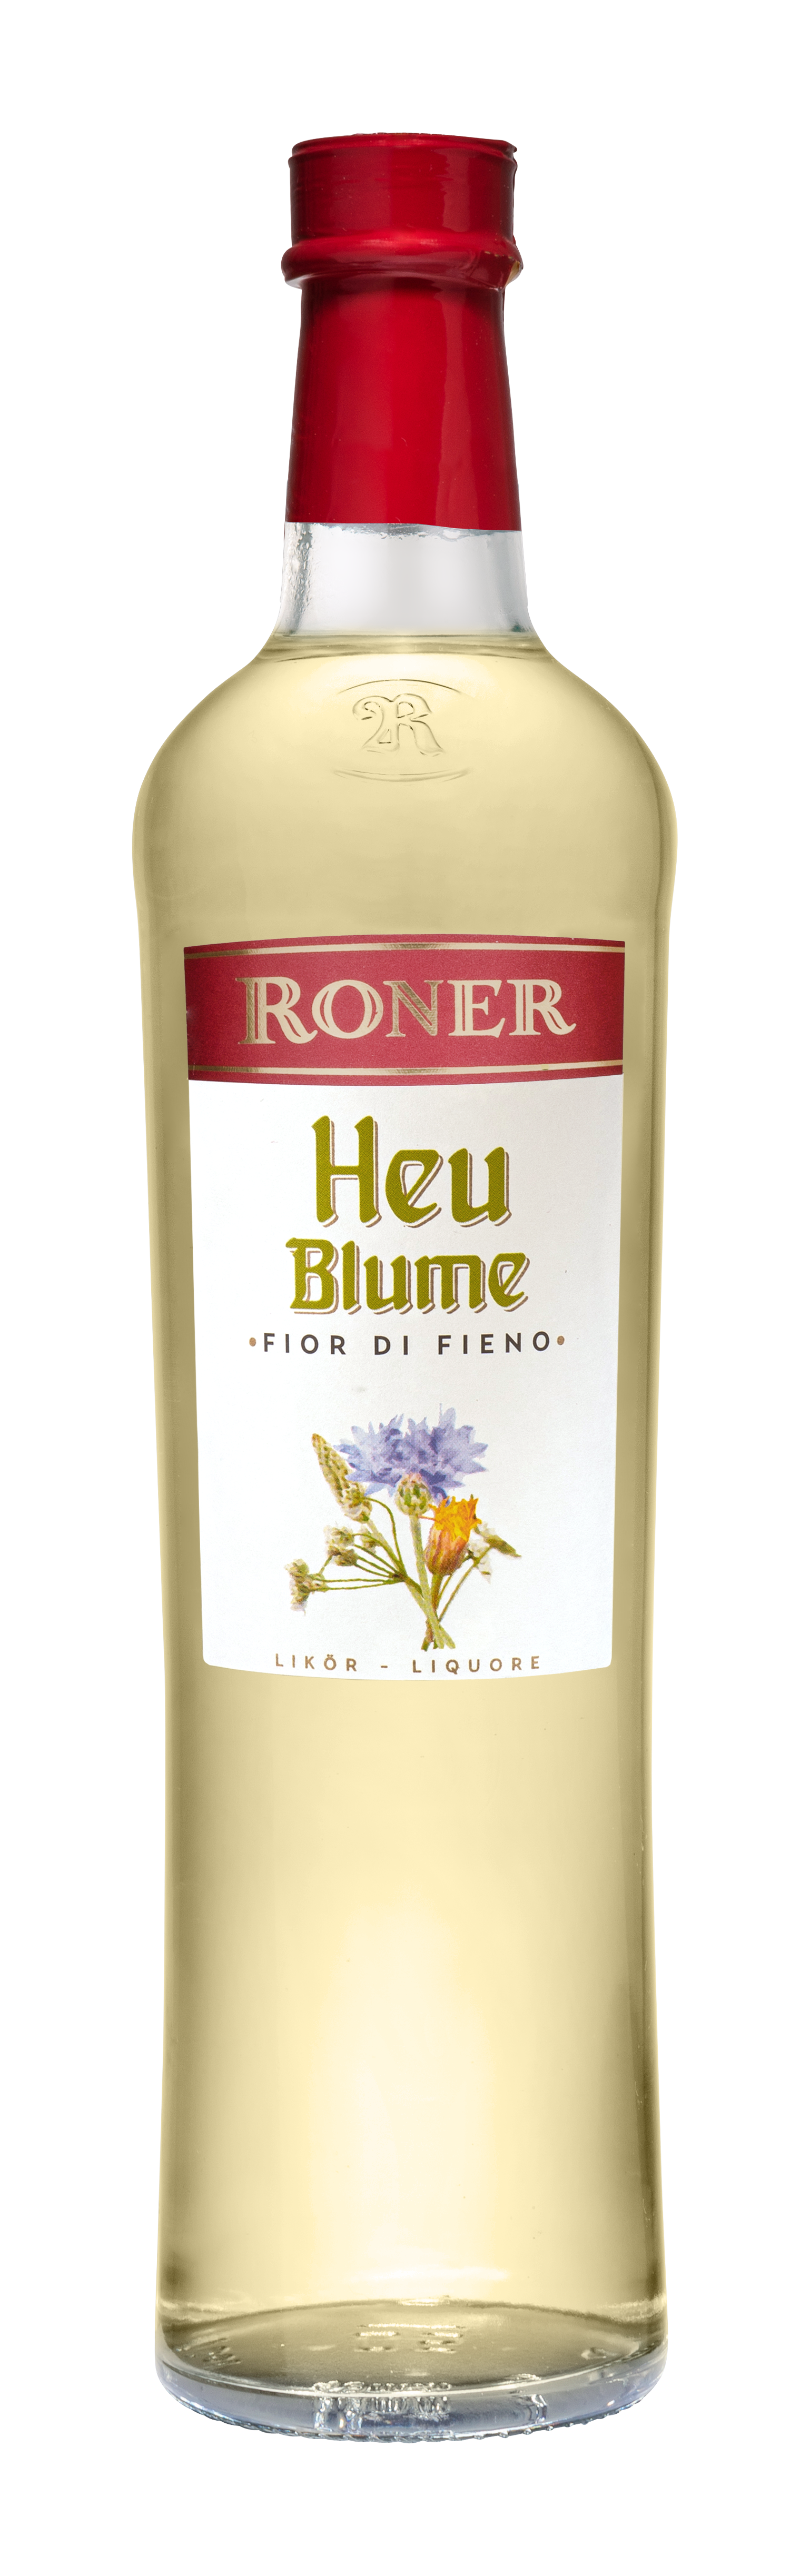 Heublume - Hay flower liquor